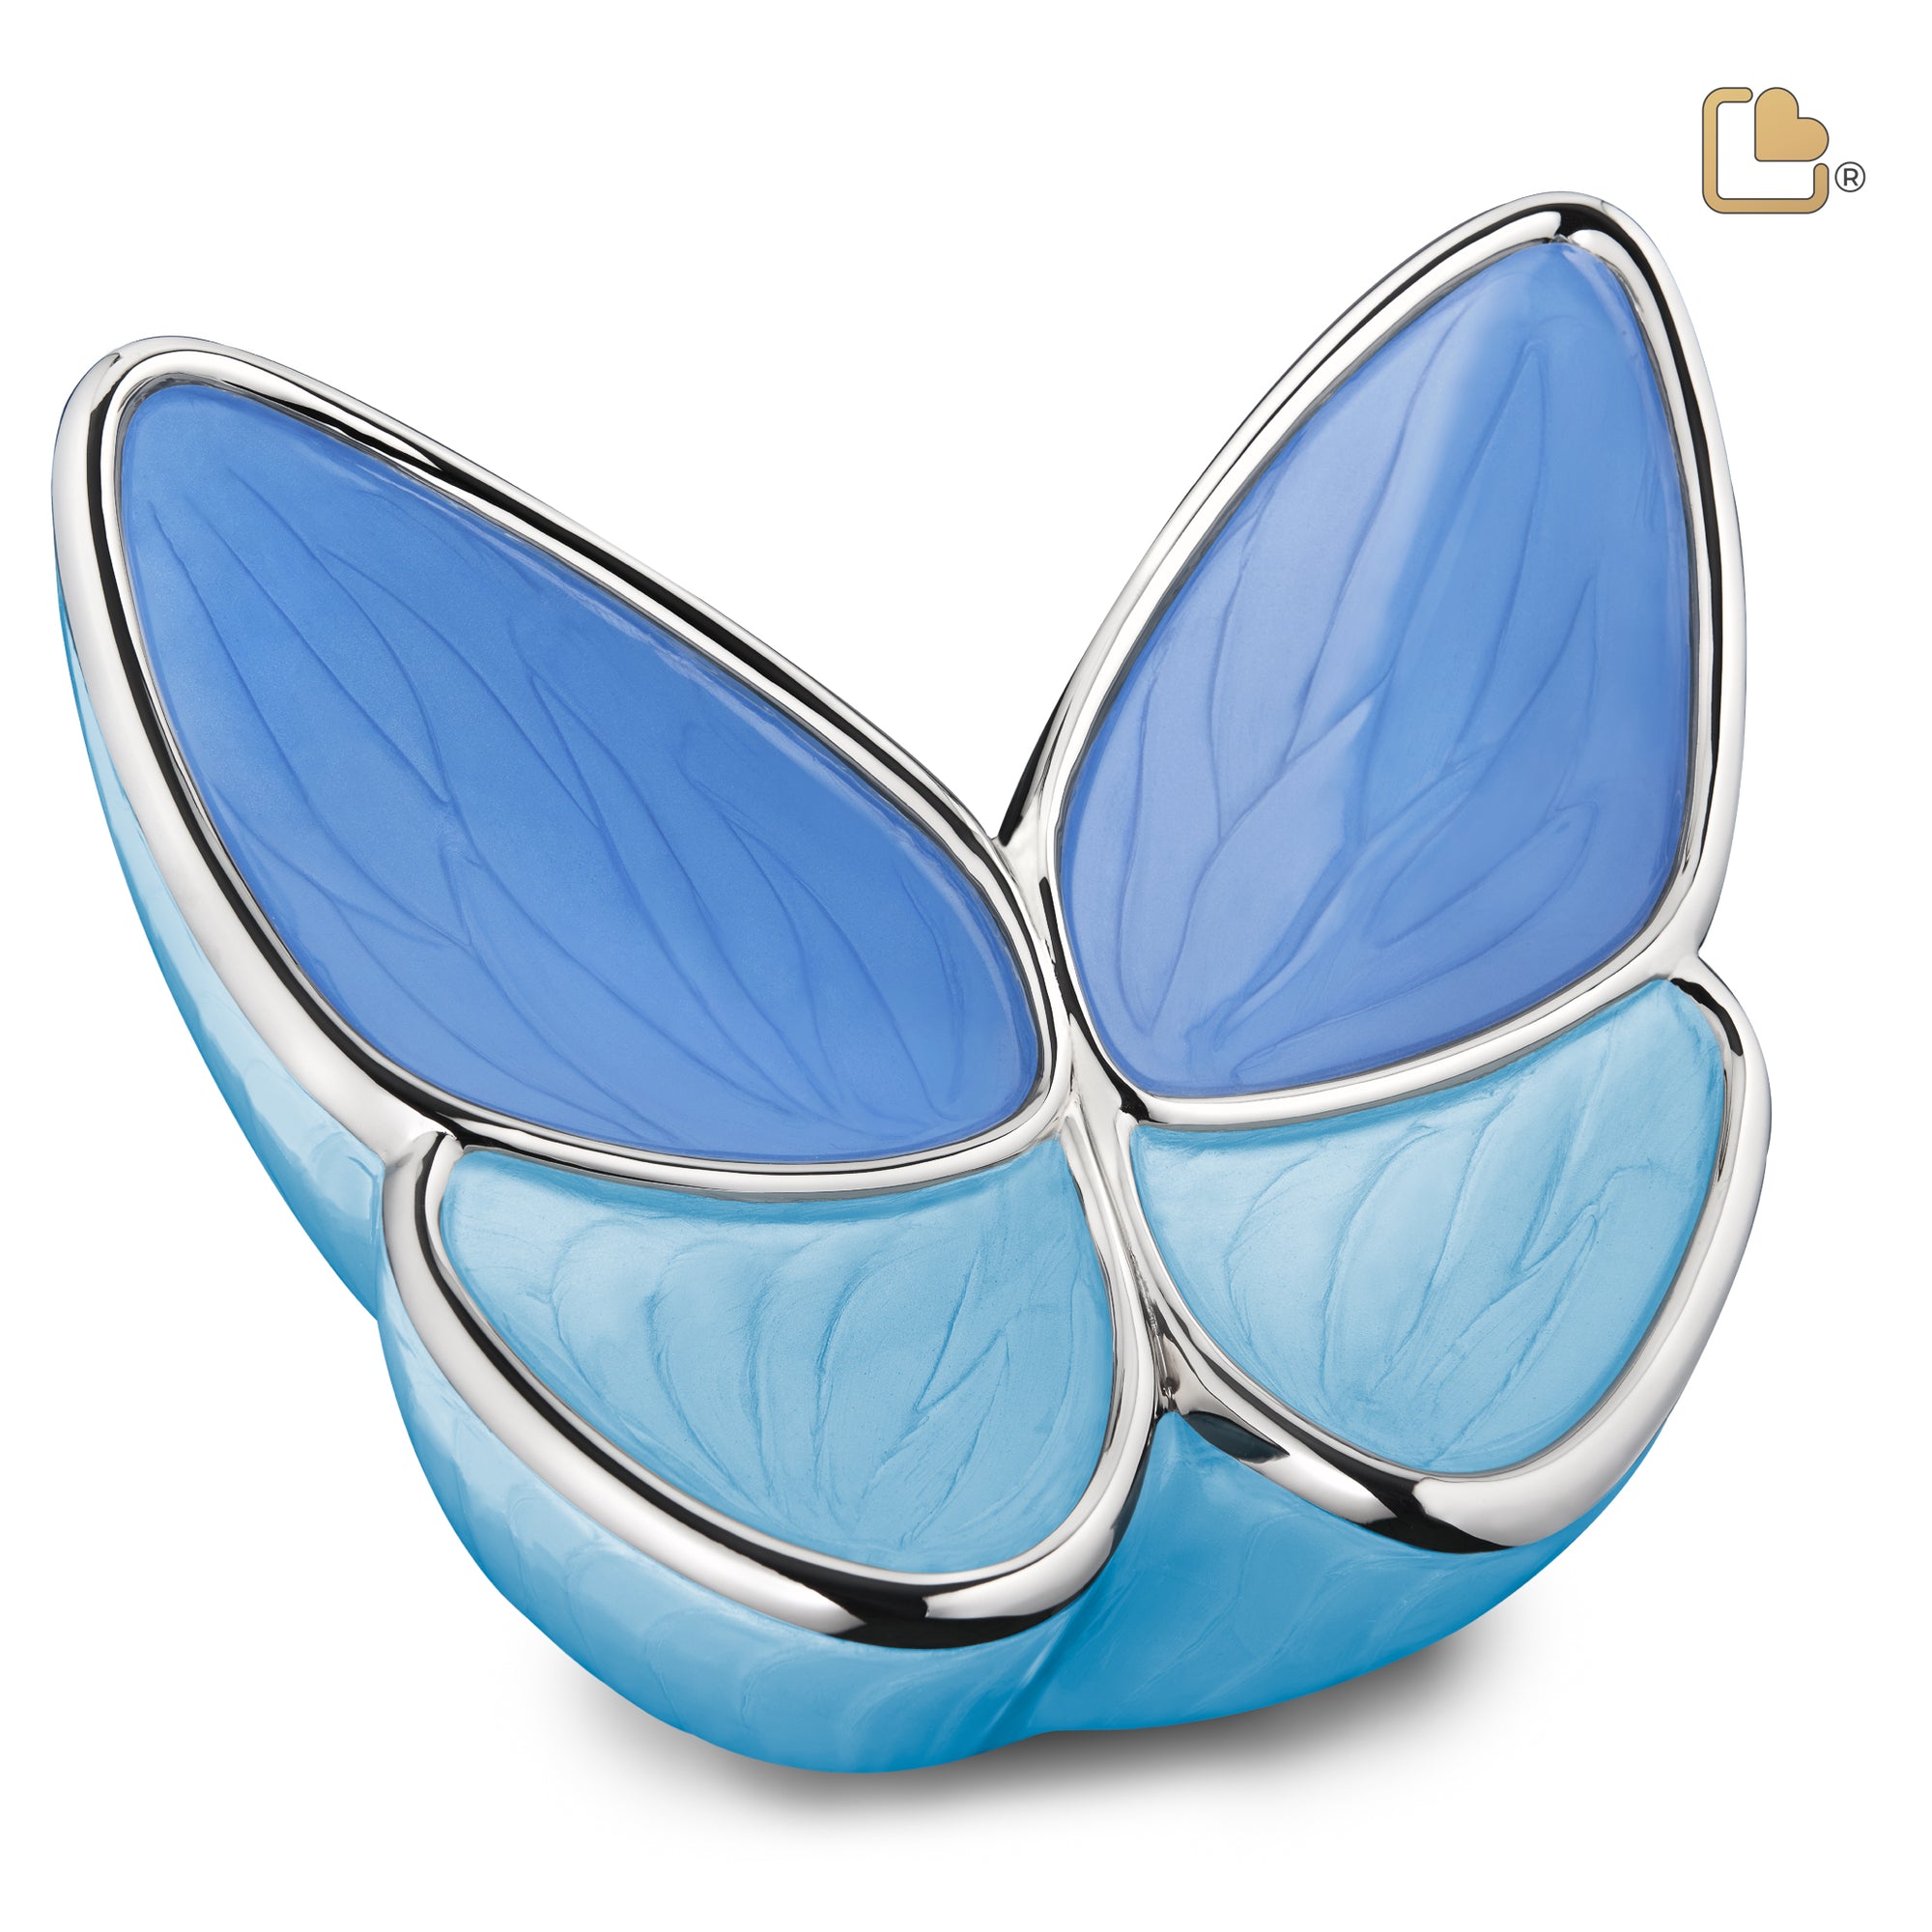 A1041   Wings of Hope Standard Adult Urn Pearl Blue & Pol Silver